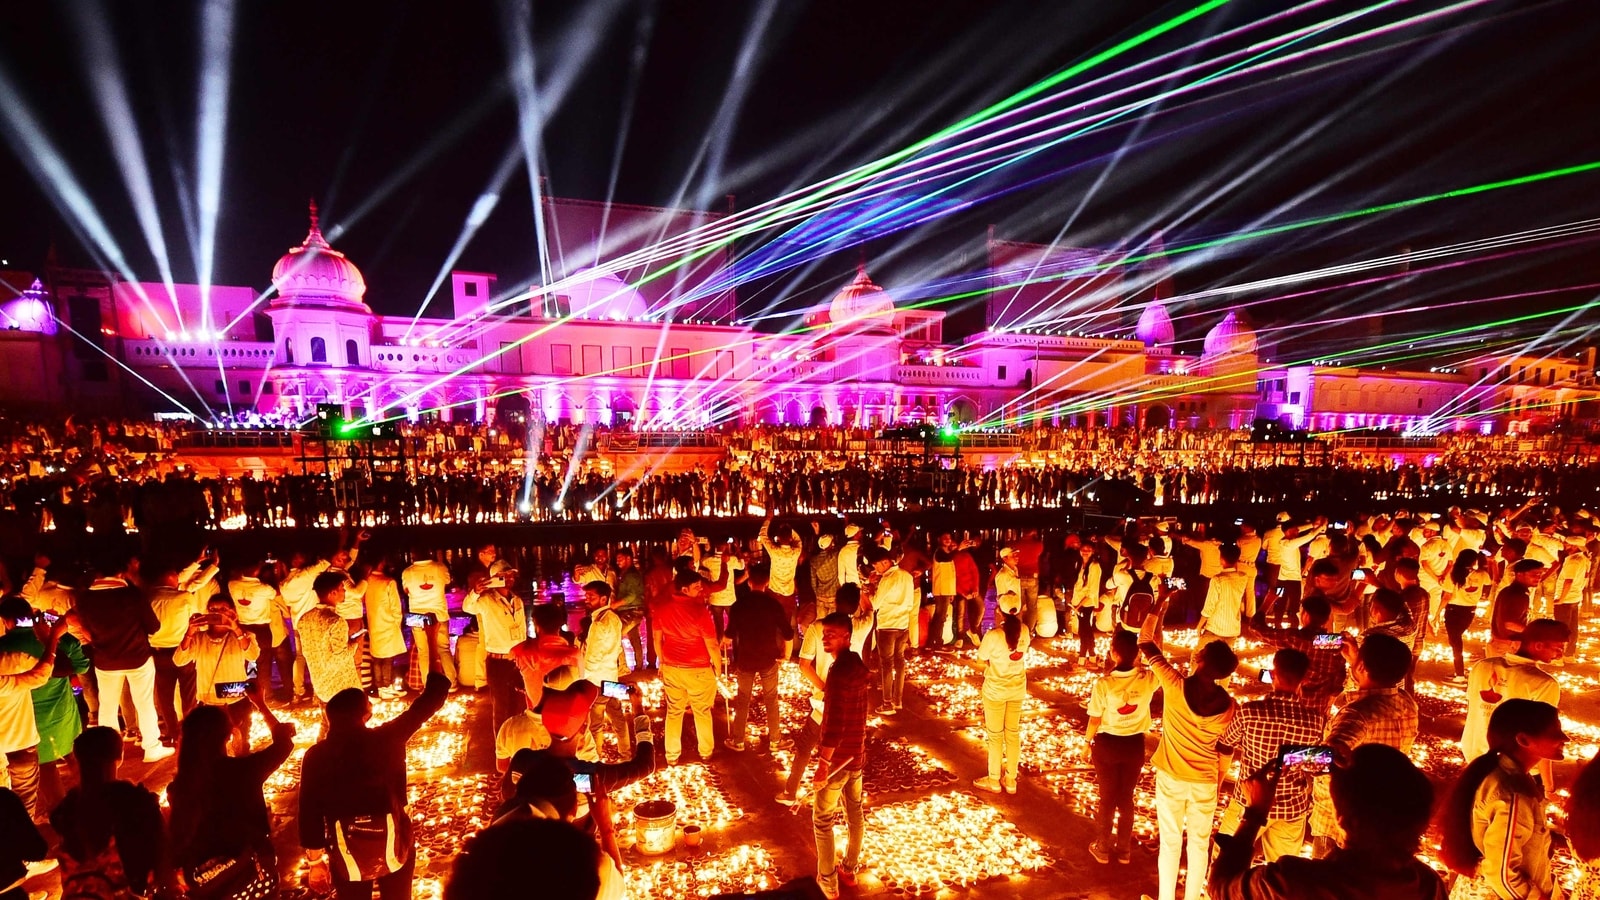 PM Modi set to visit Ayodhya for Deepotsav celebration on eve of Diwali |  Latest News India - Hindustan Times